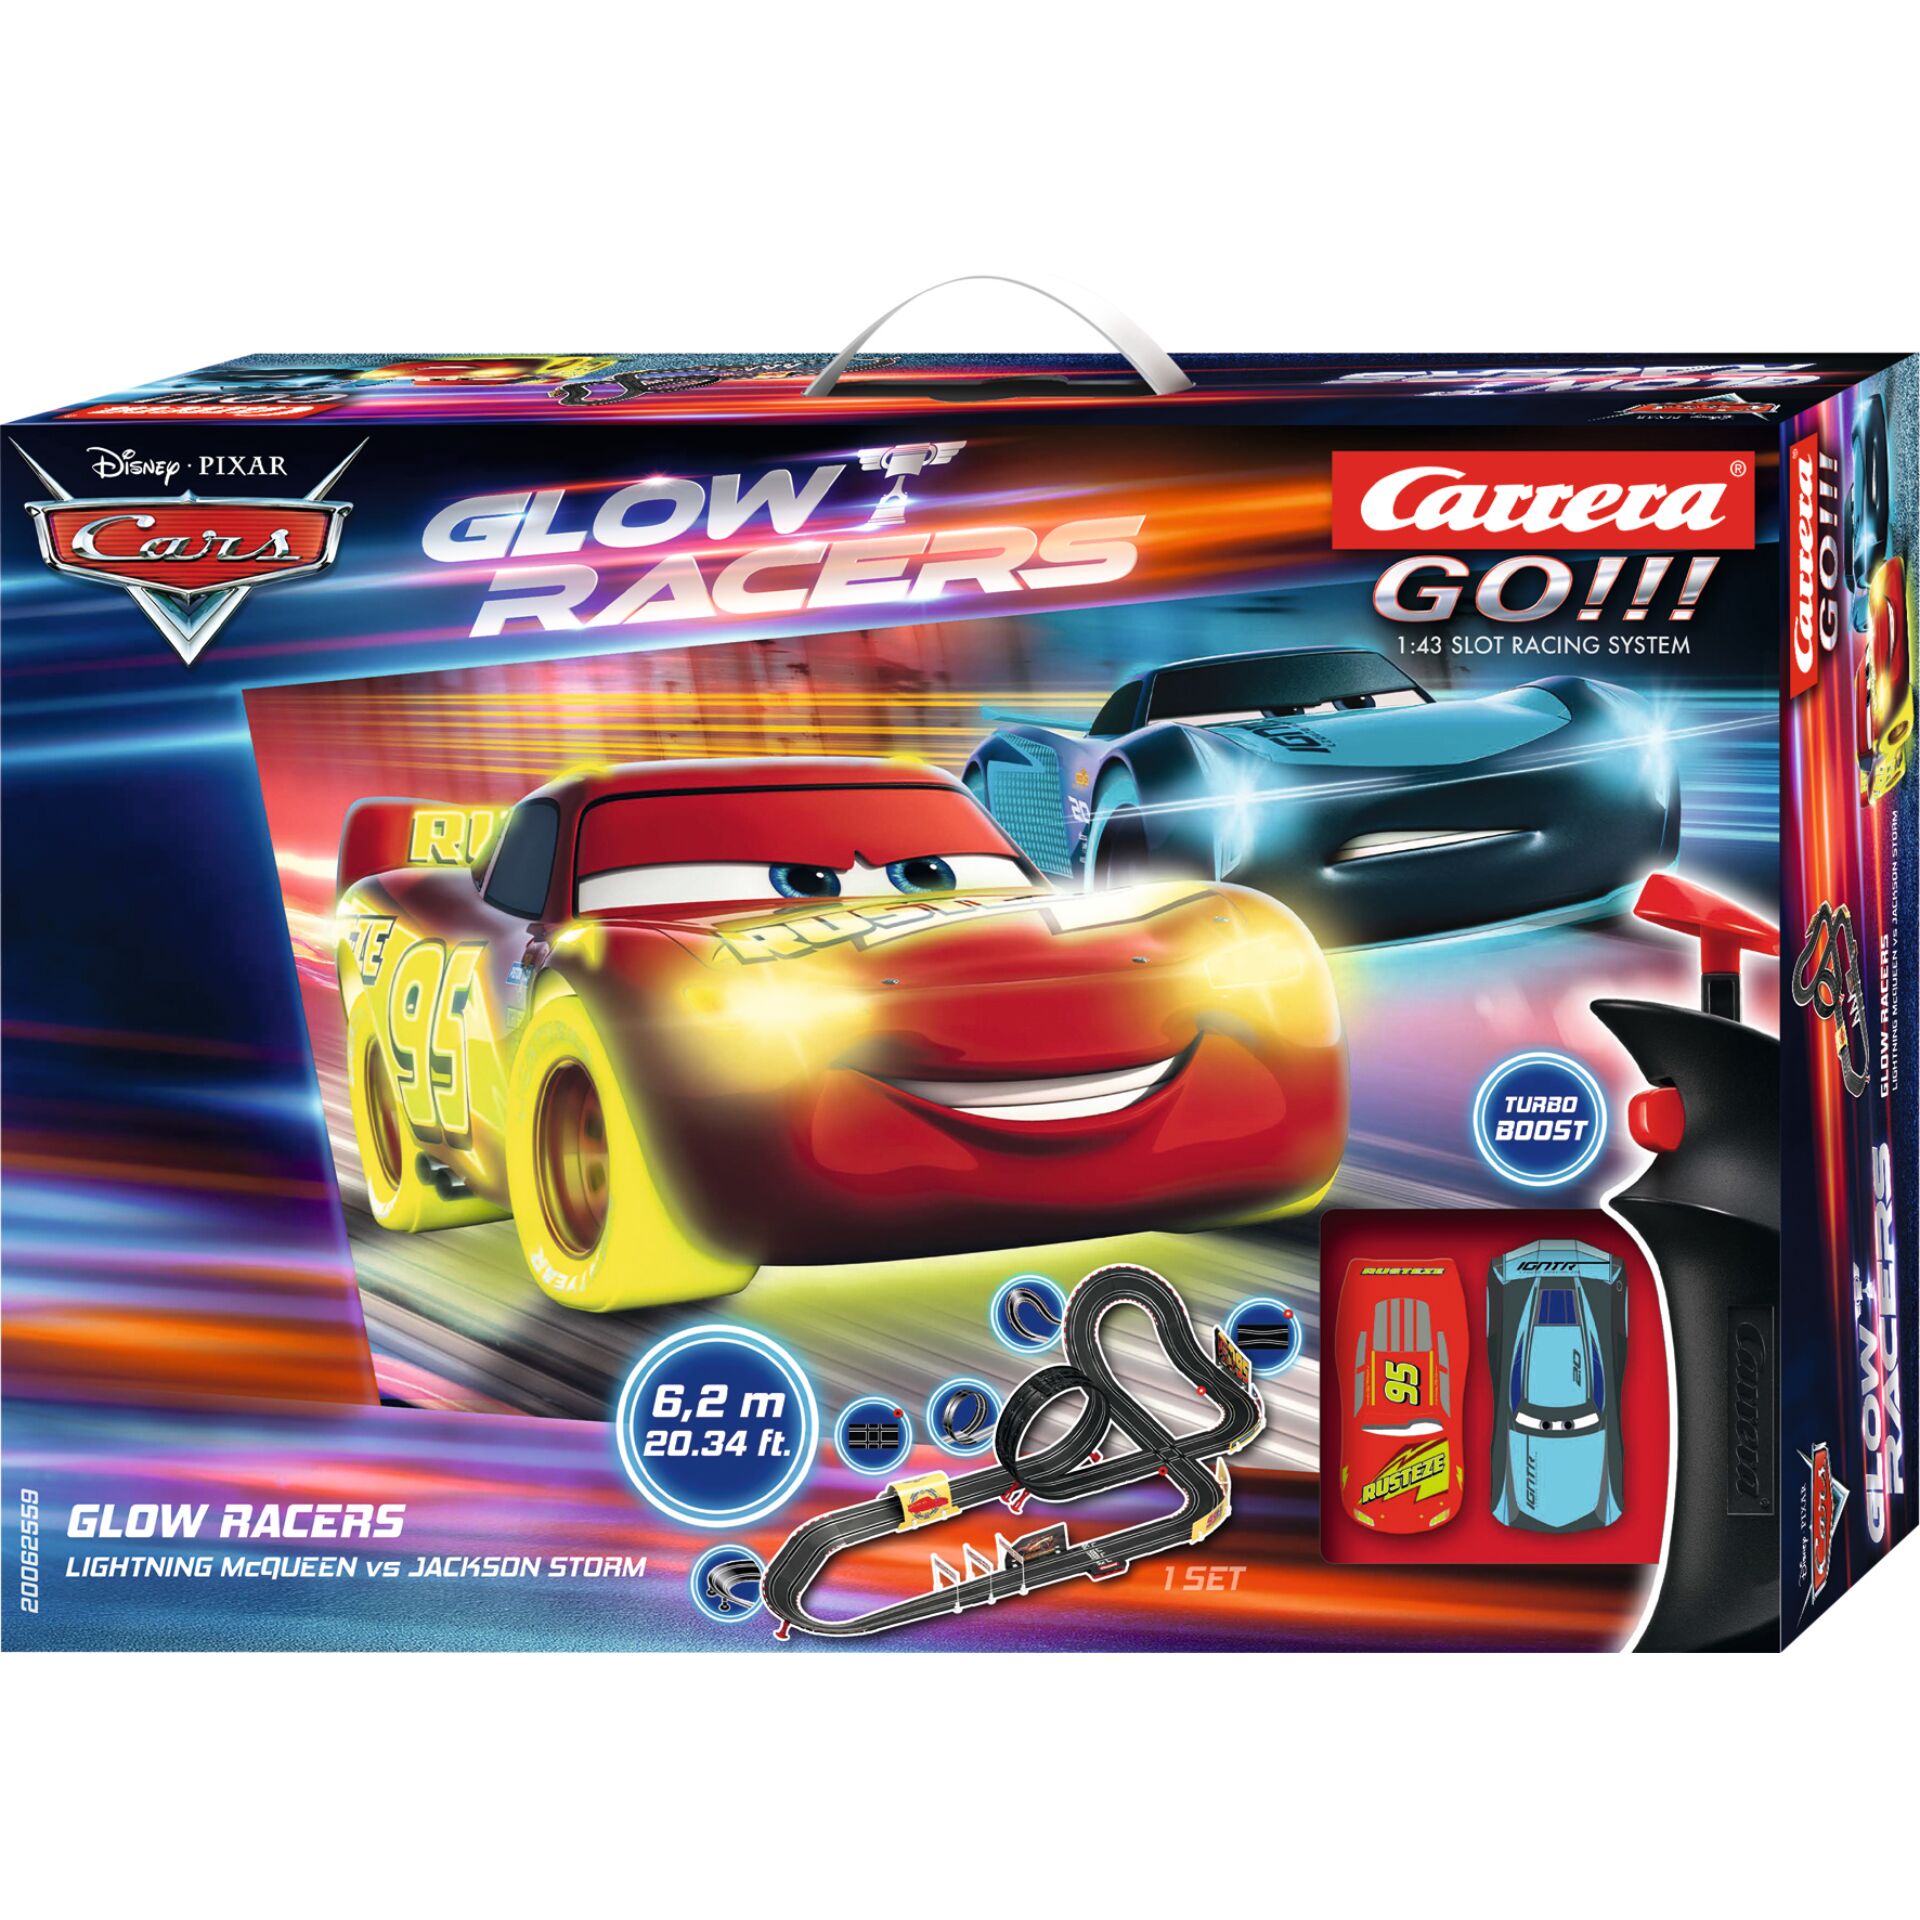 Carrera GO!!! Set - Disney Pixar Cars Glow Racers